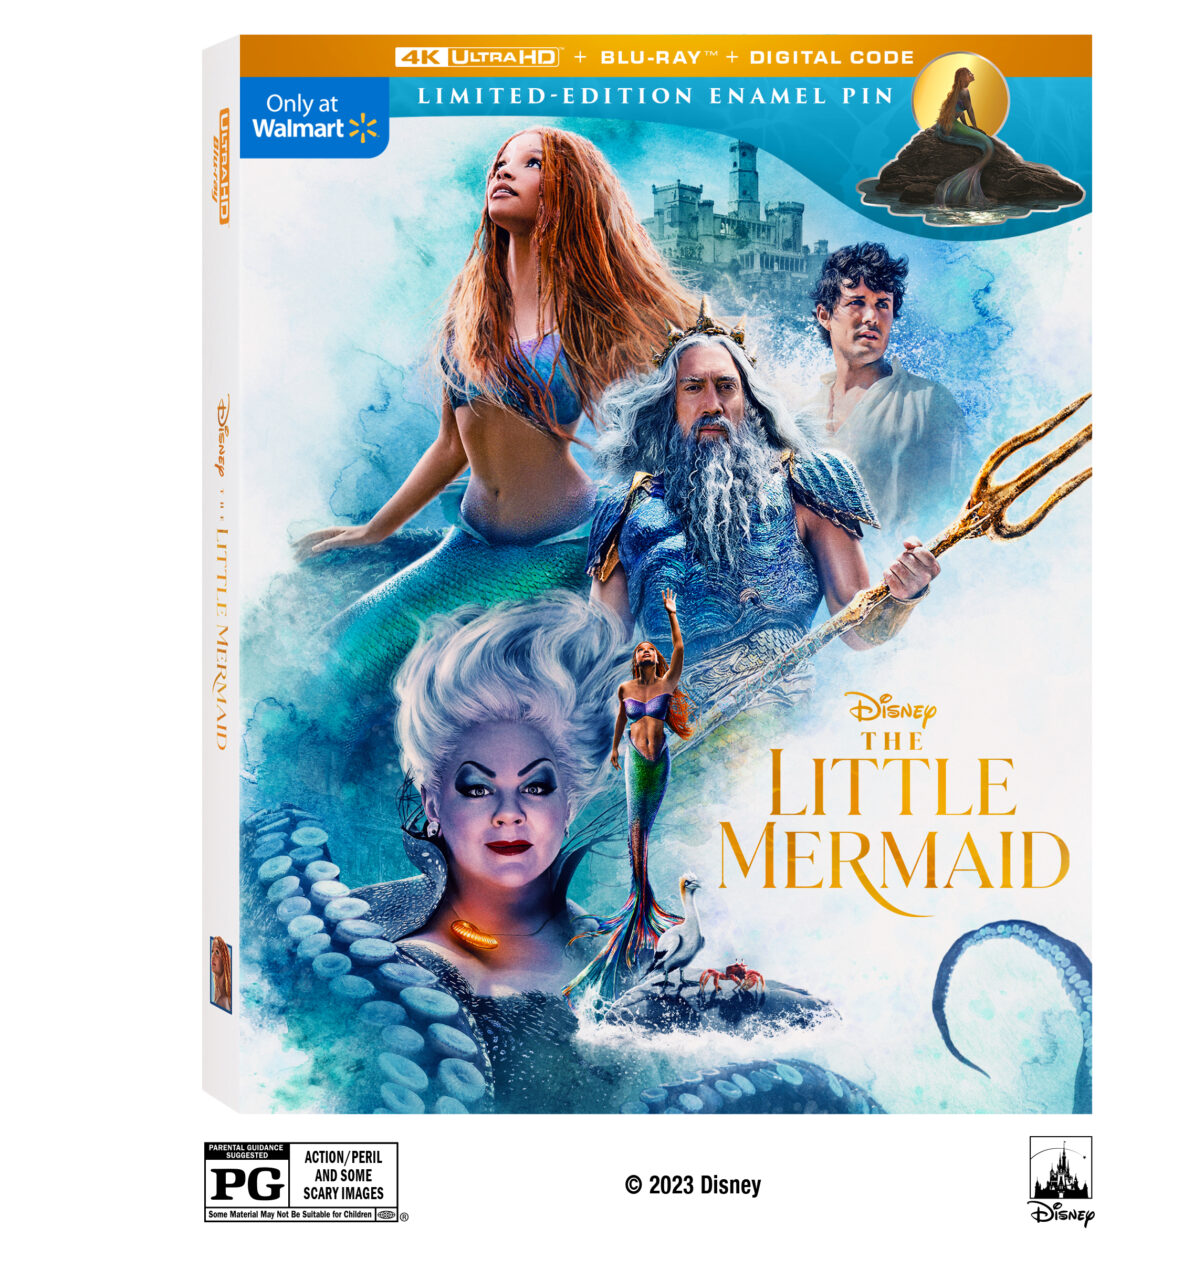 The Little Mermaid Walmart 4K Ultra HD Combo Pack cover (Disney)